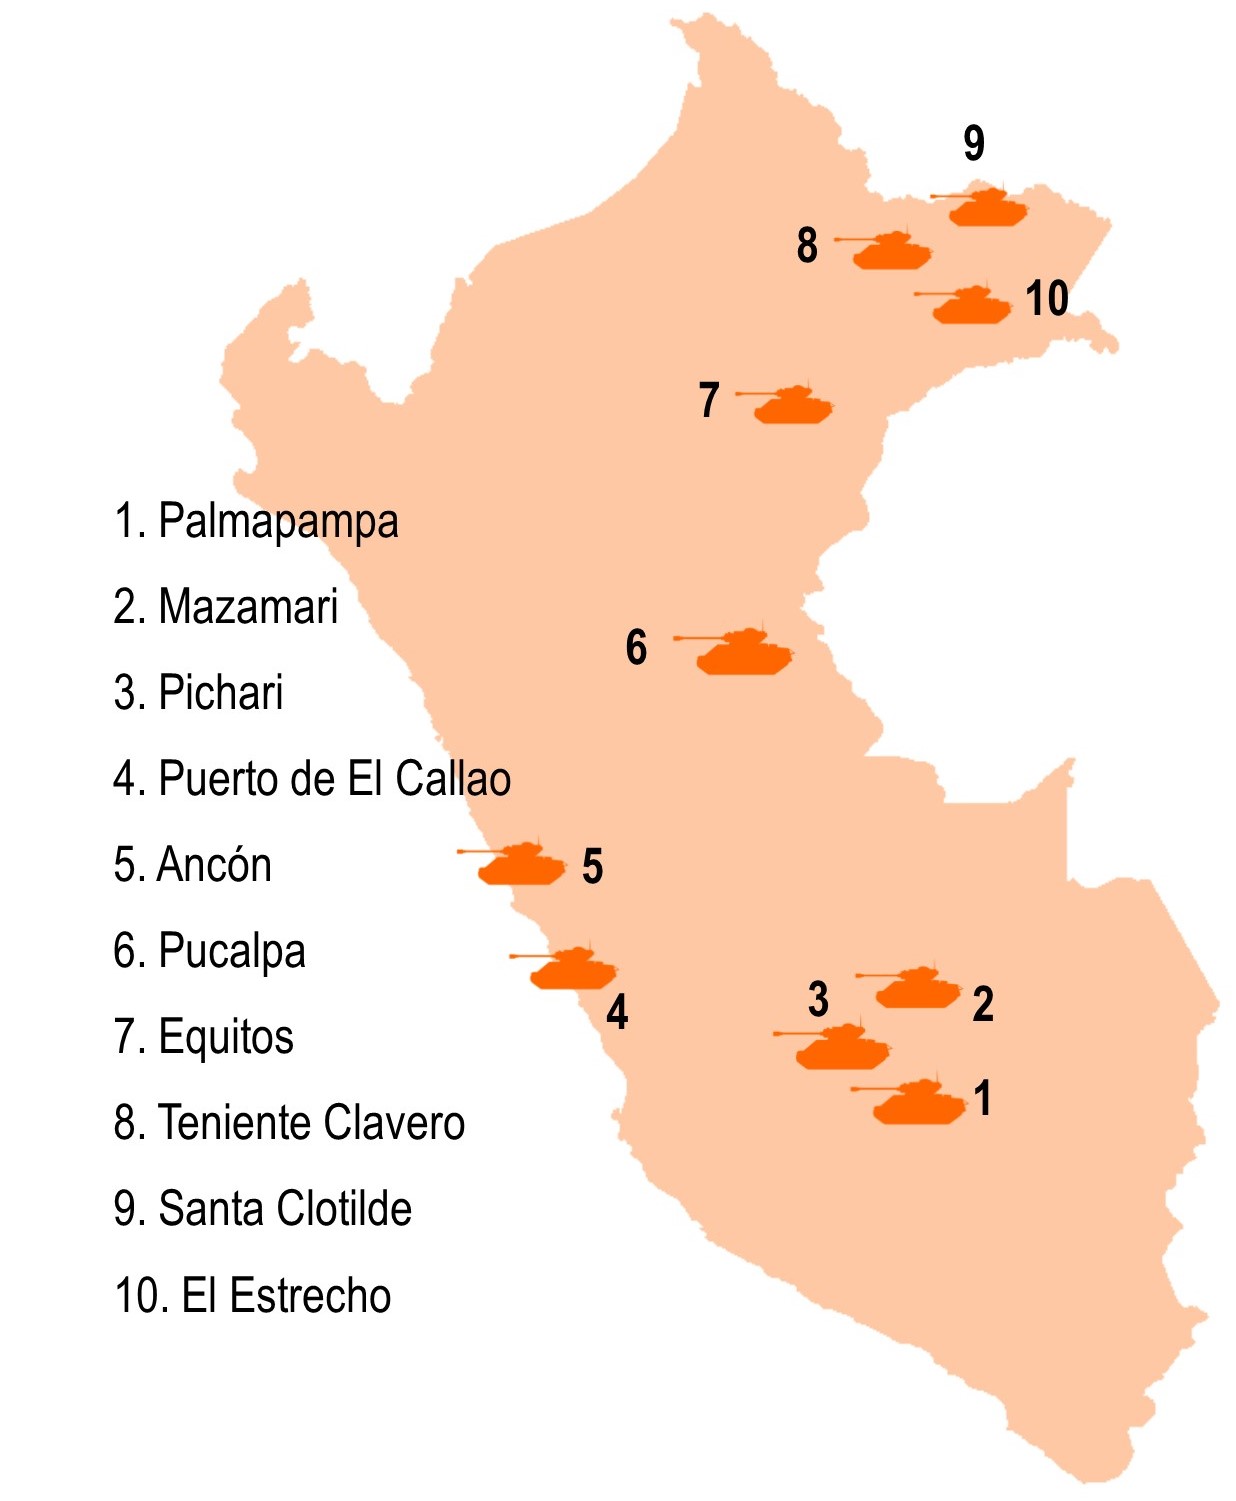 At present, there are more than 10 US military bases throughout Peruvian territory, installed in private modules or in Peruvian military or navy bases. They are located in strategic energy posts. Among the best known military bases are: 1. Palmapampa (in the VRAEM). 2. Mazamari – VRAEM. 3. Pichari – VRAEM. 4. Puerto de El Callao. 5. Ancon. 6. Pucalpa. 7. Equitos. 8. Teniente Clavero 9. Putumayo - Santa Clotilde - Loreto. 10. El Estrecho.